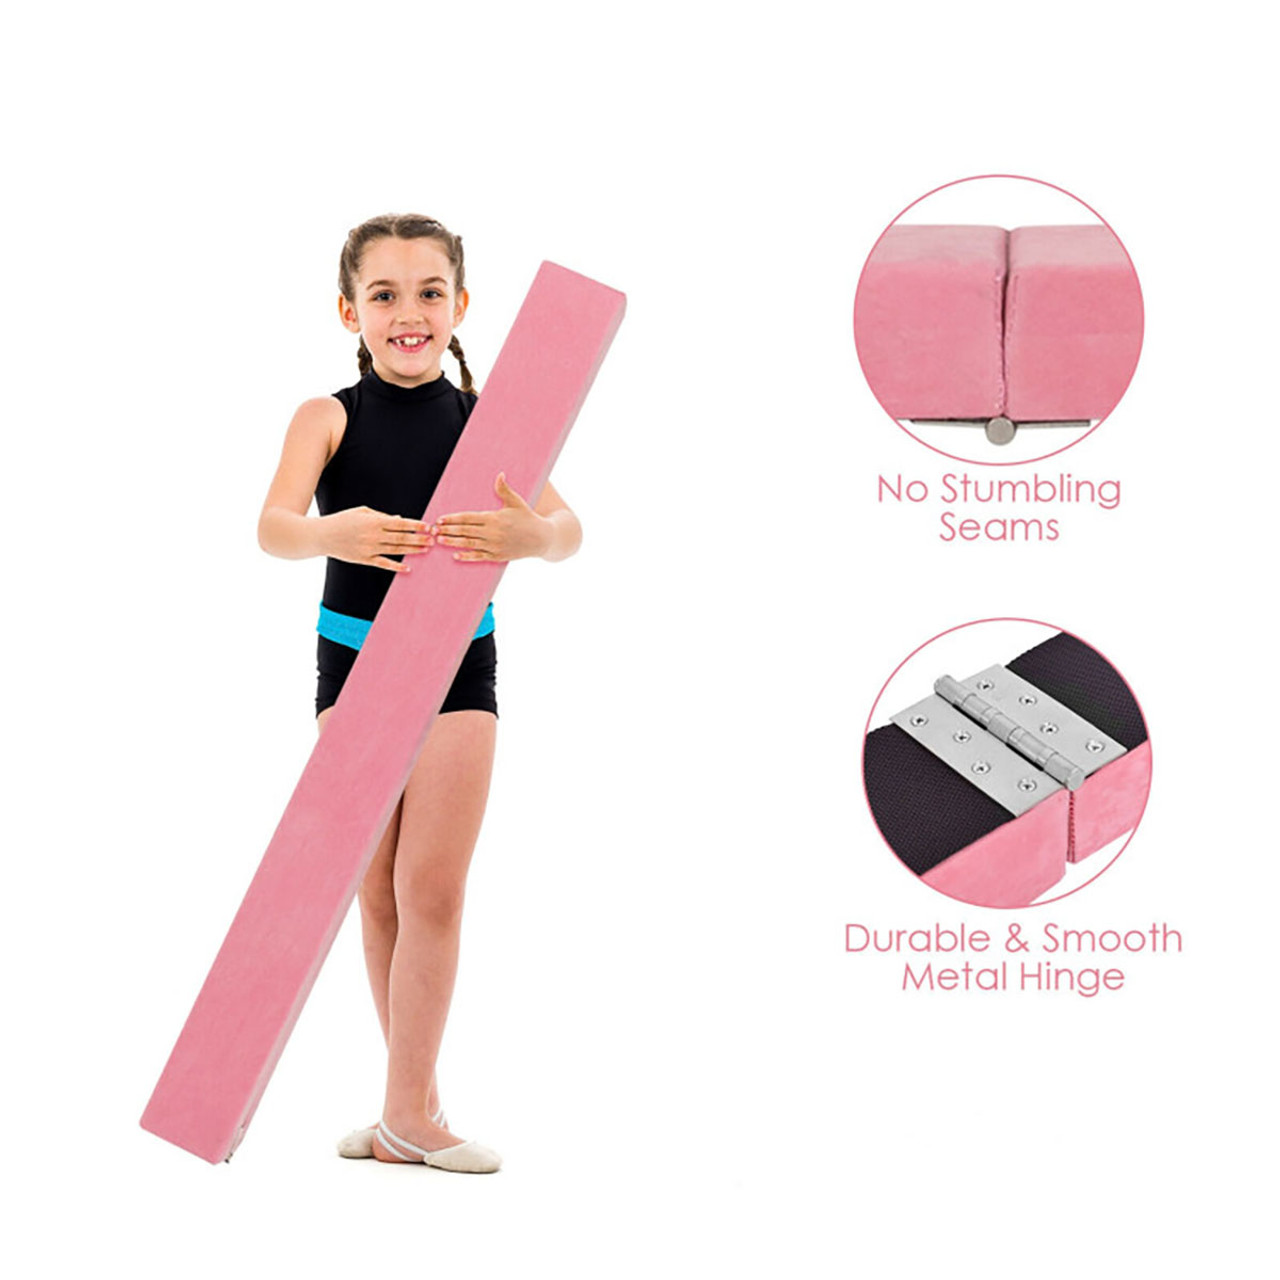 7-foot Folding Gymnastic Beam product image